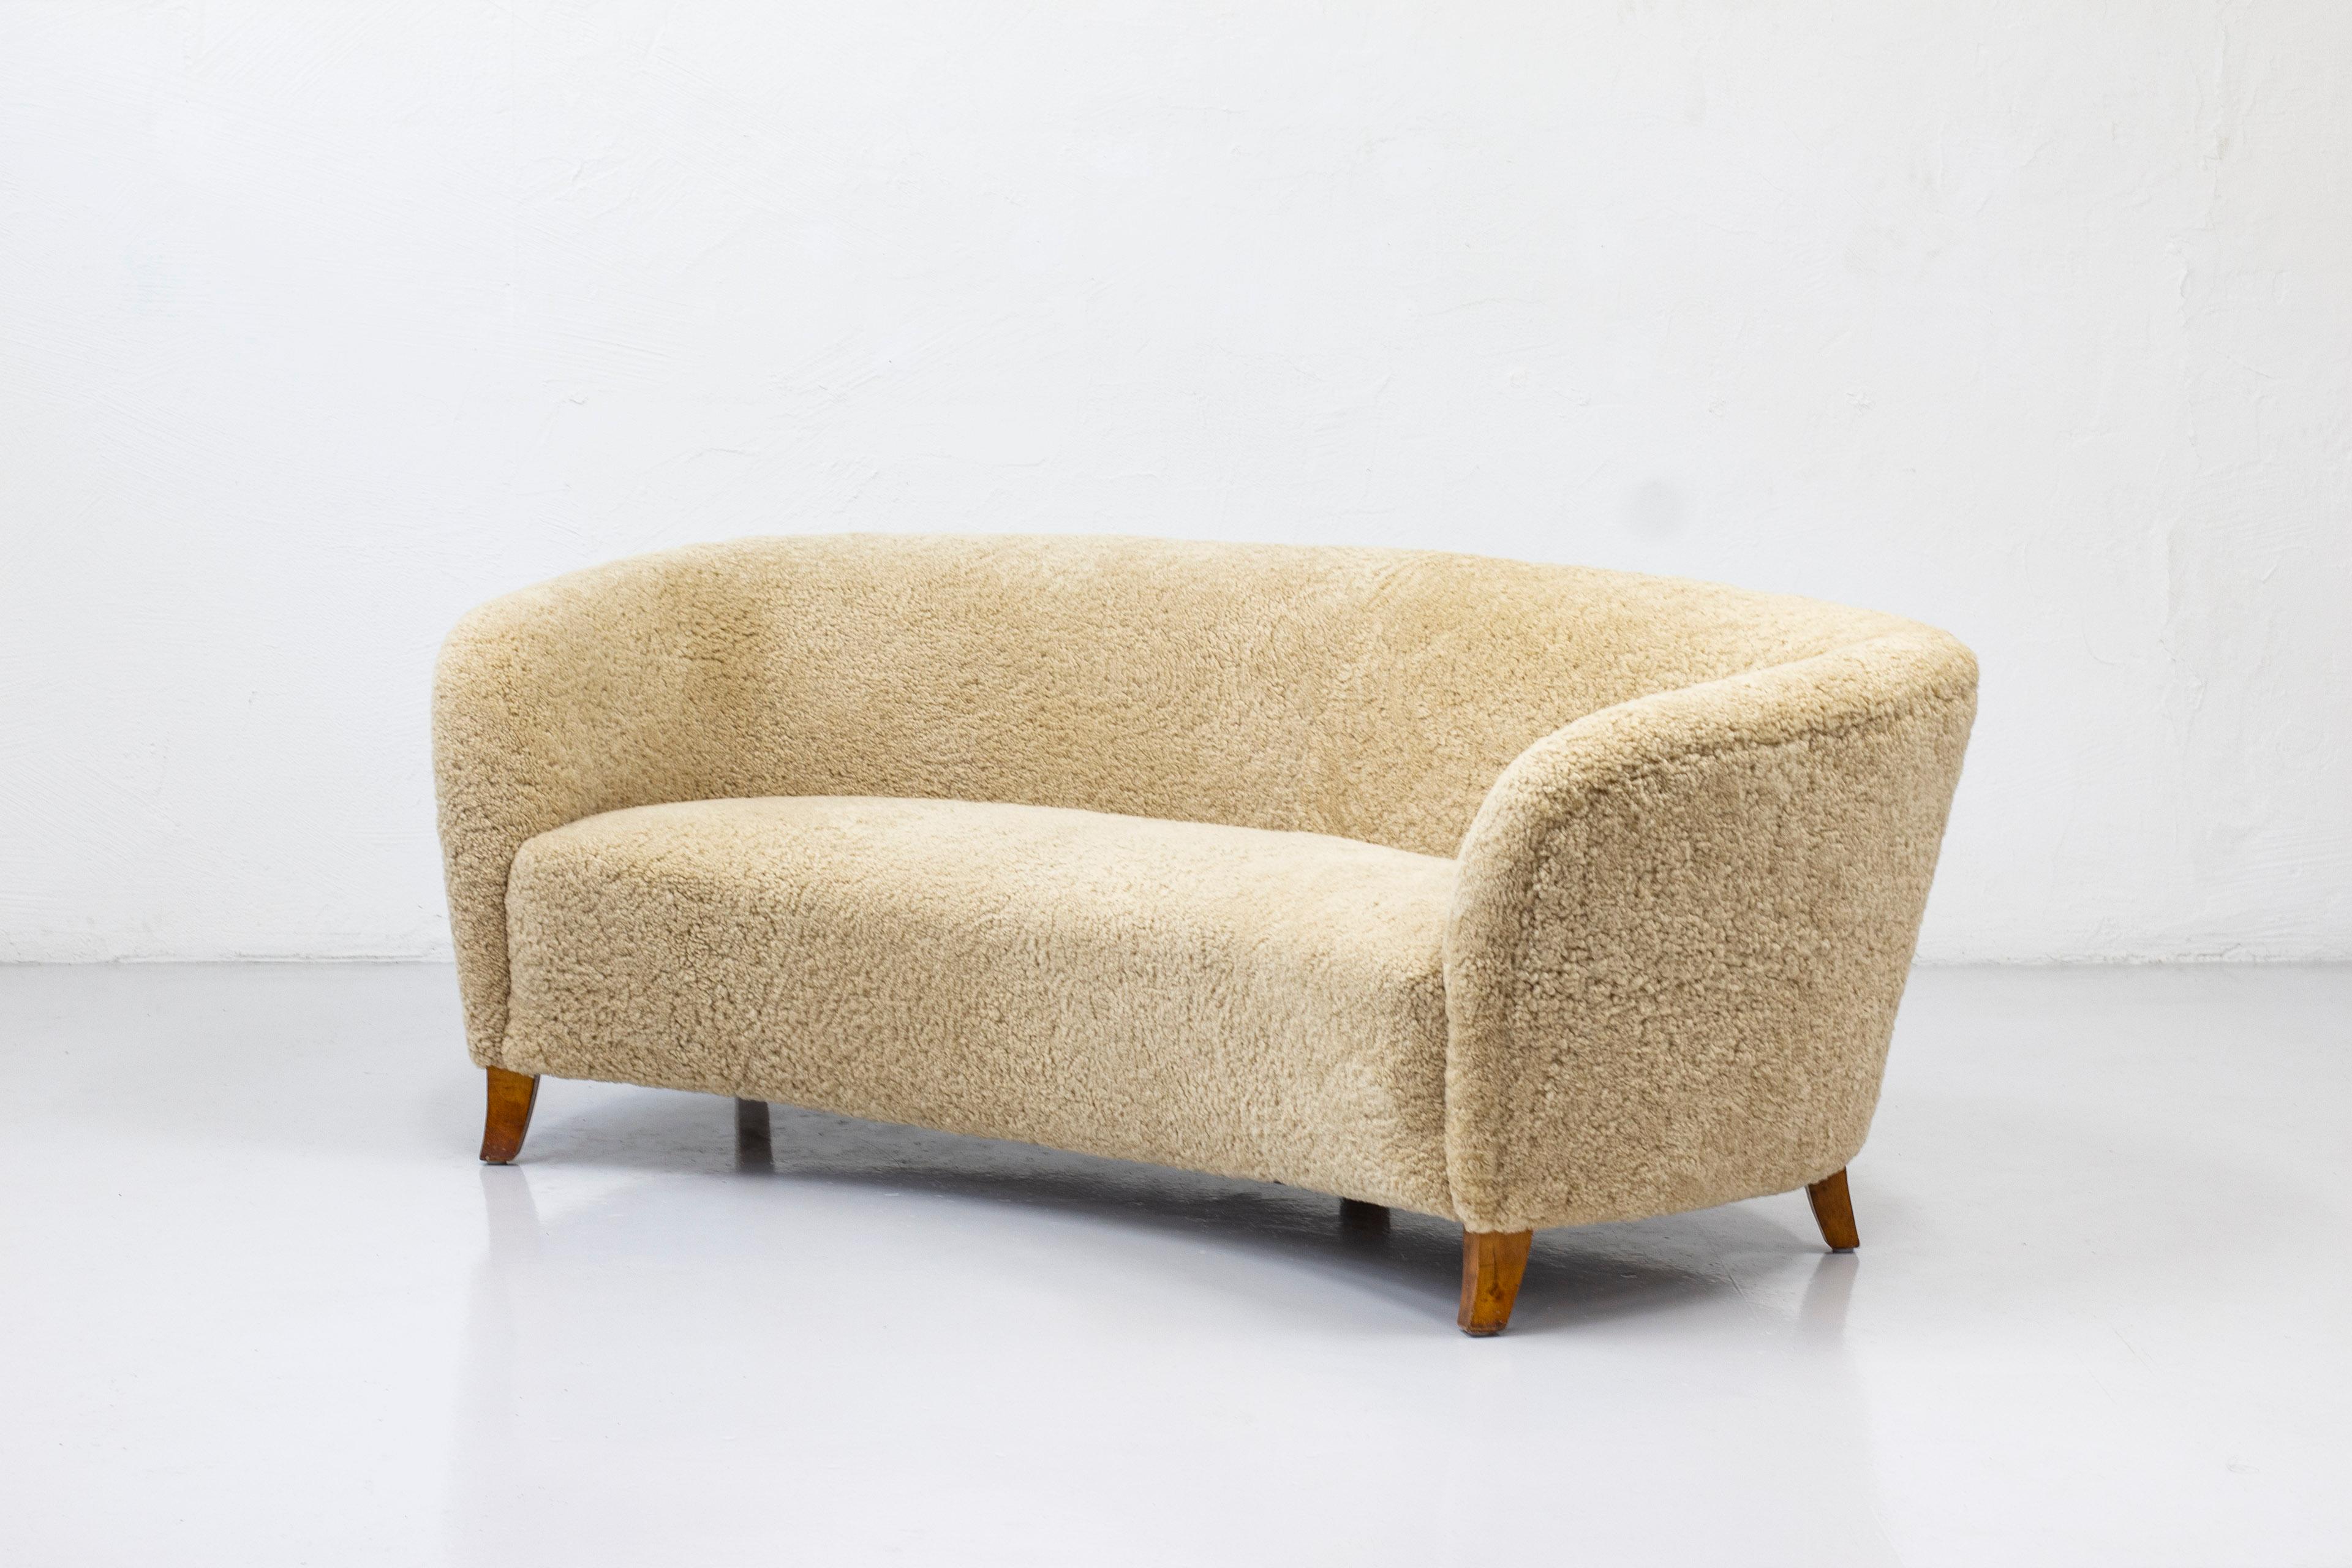 Curved Swedish Modern Sofa with Sheepskin, Sweden, 1930-40s 1